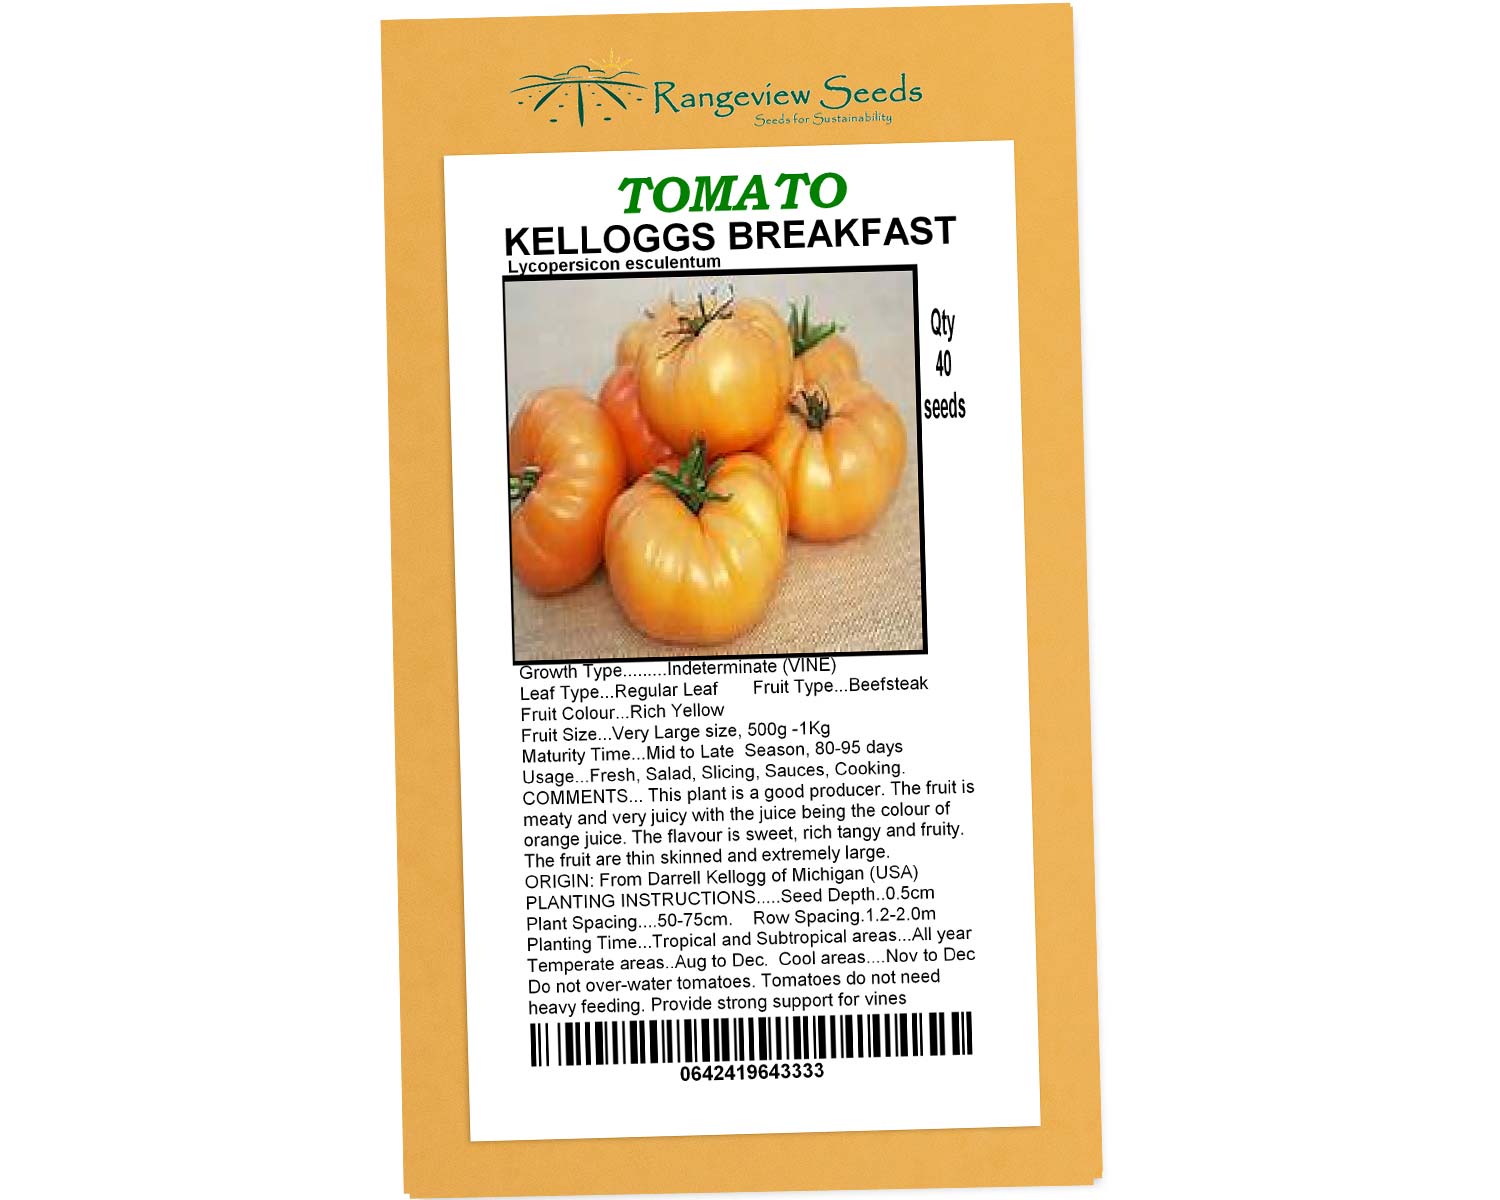 Tomato Kelogg's Breakfast - Rangeview Seeds